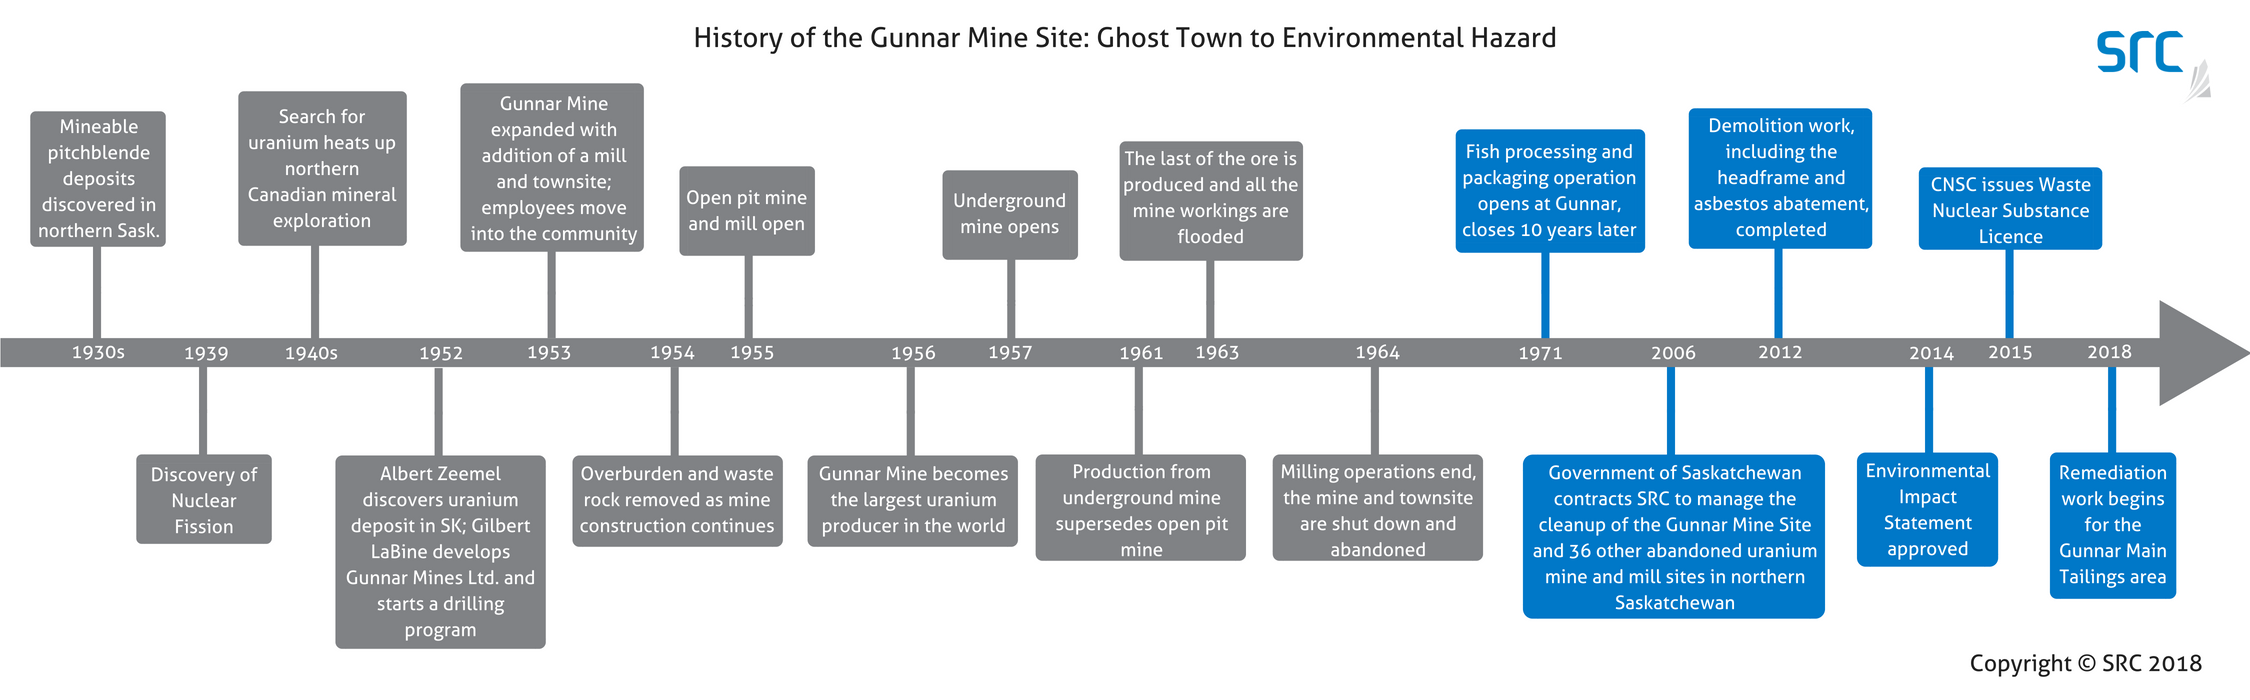 gunnar history timeline src